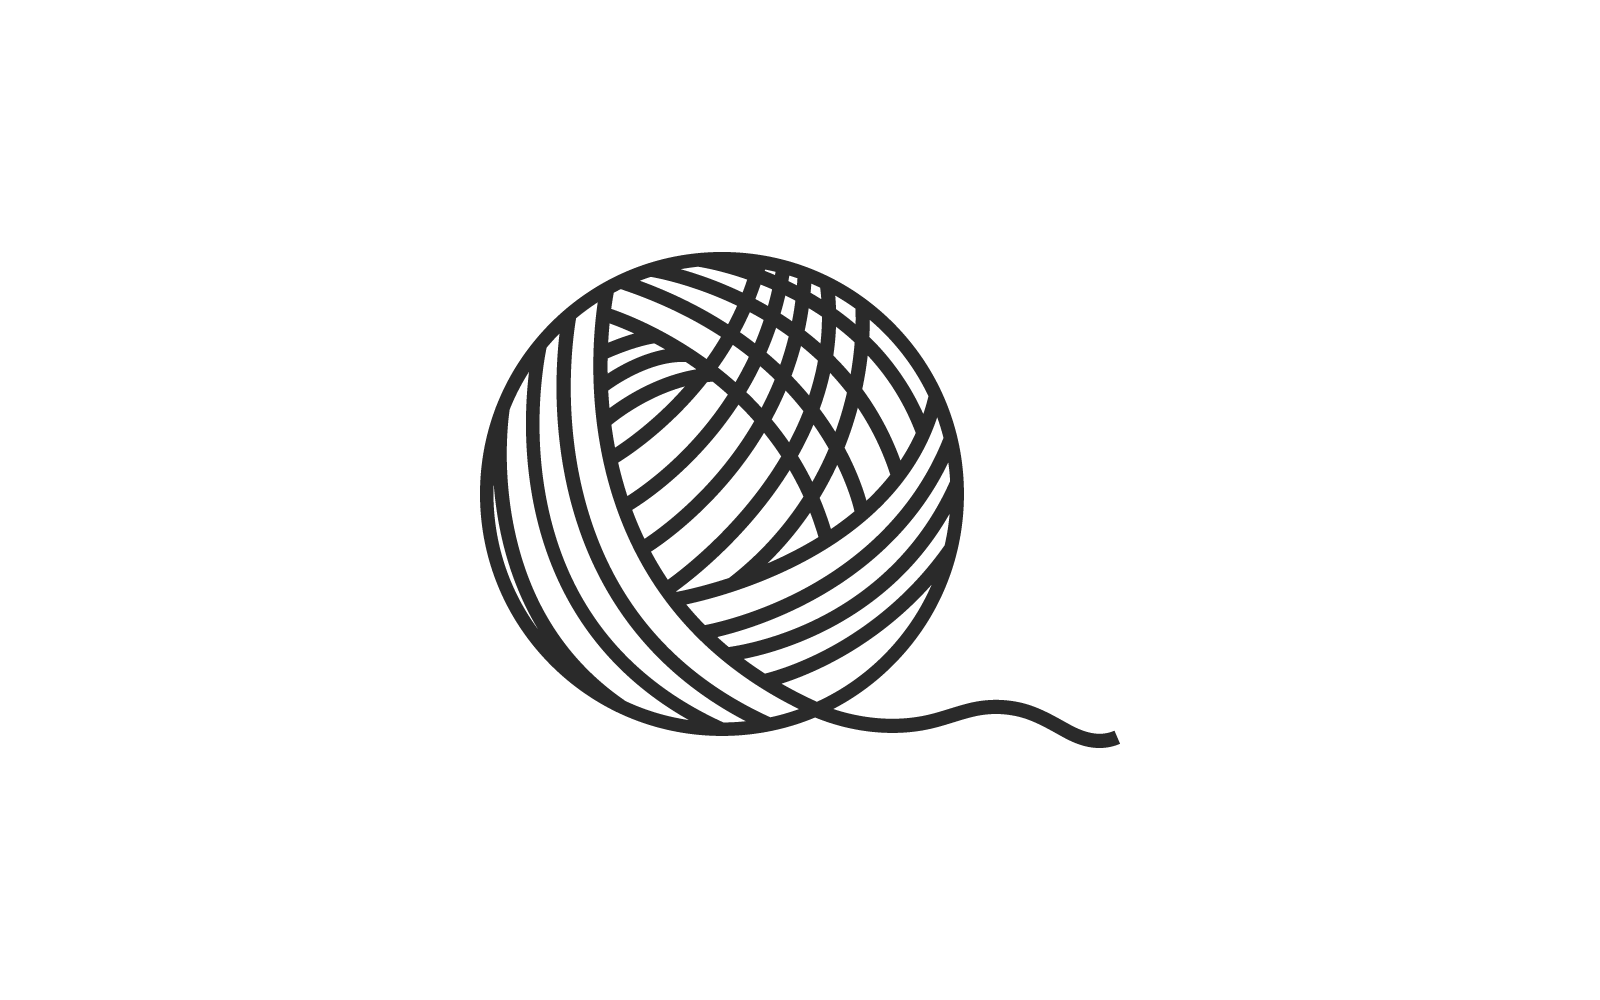 Yarn ball illustration vector design template